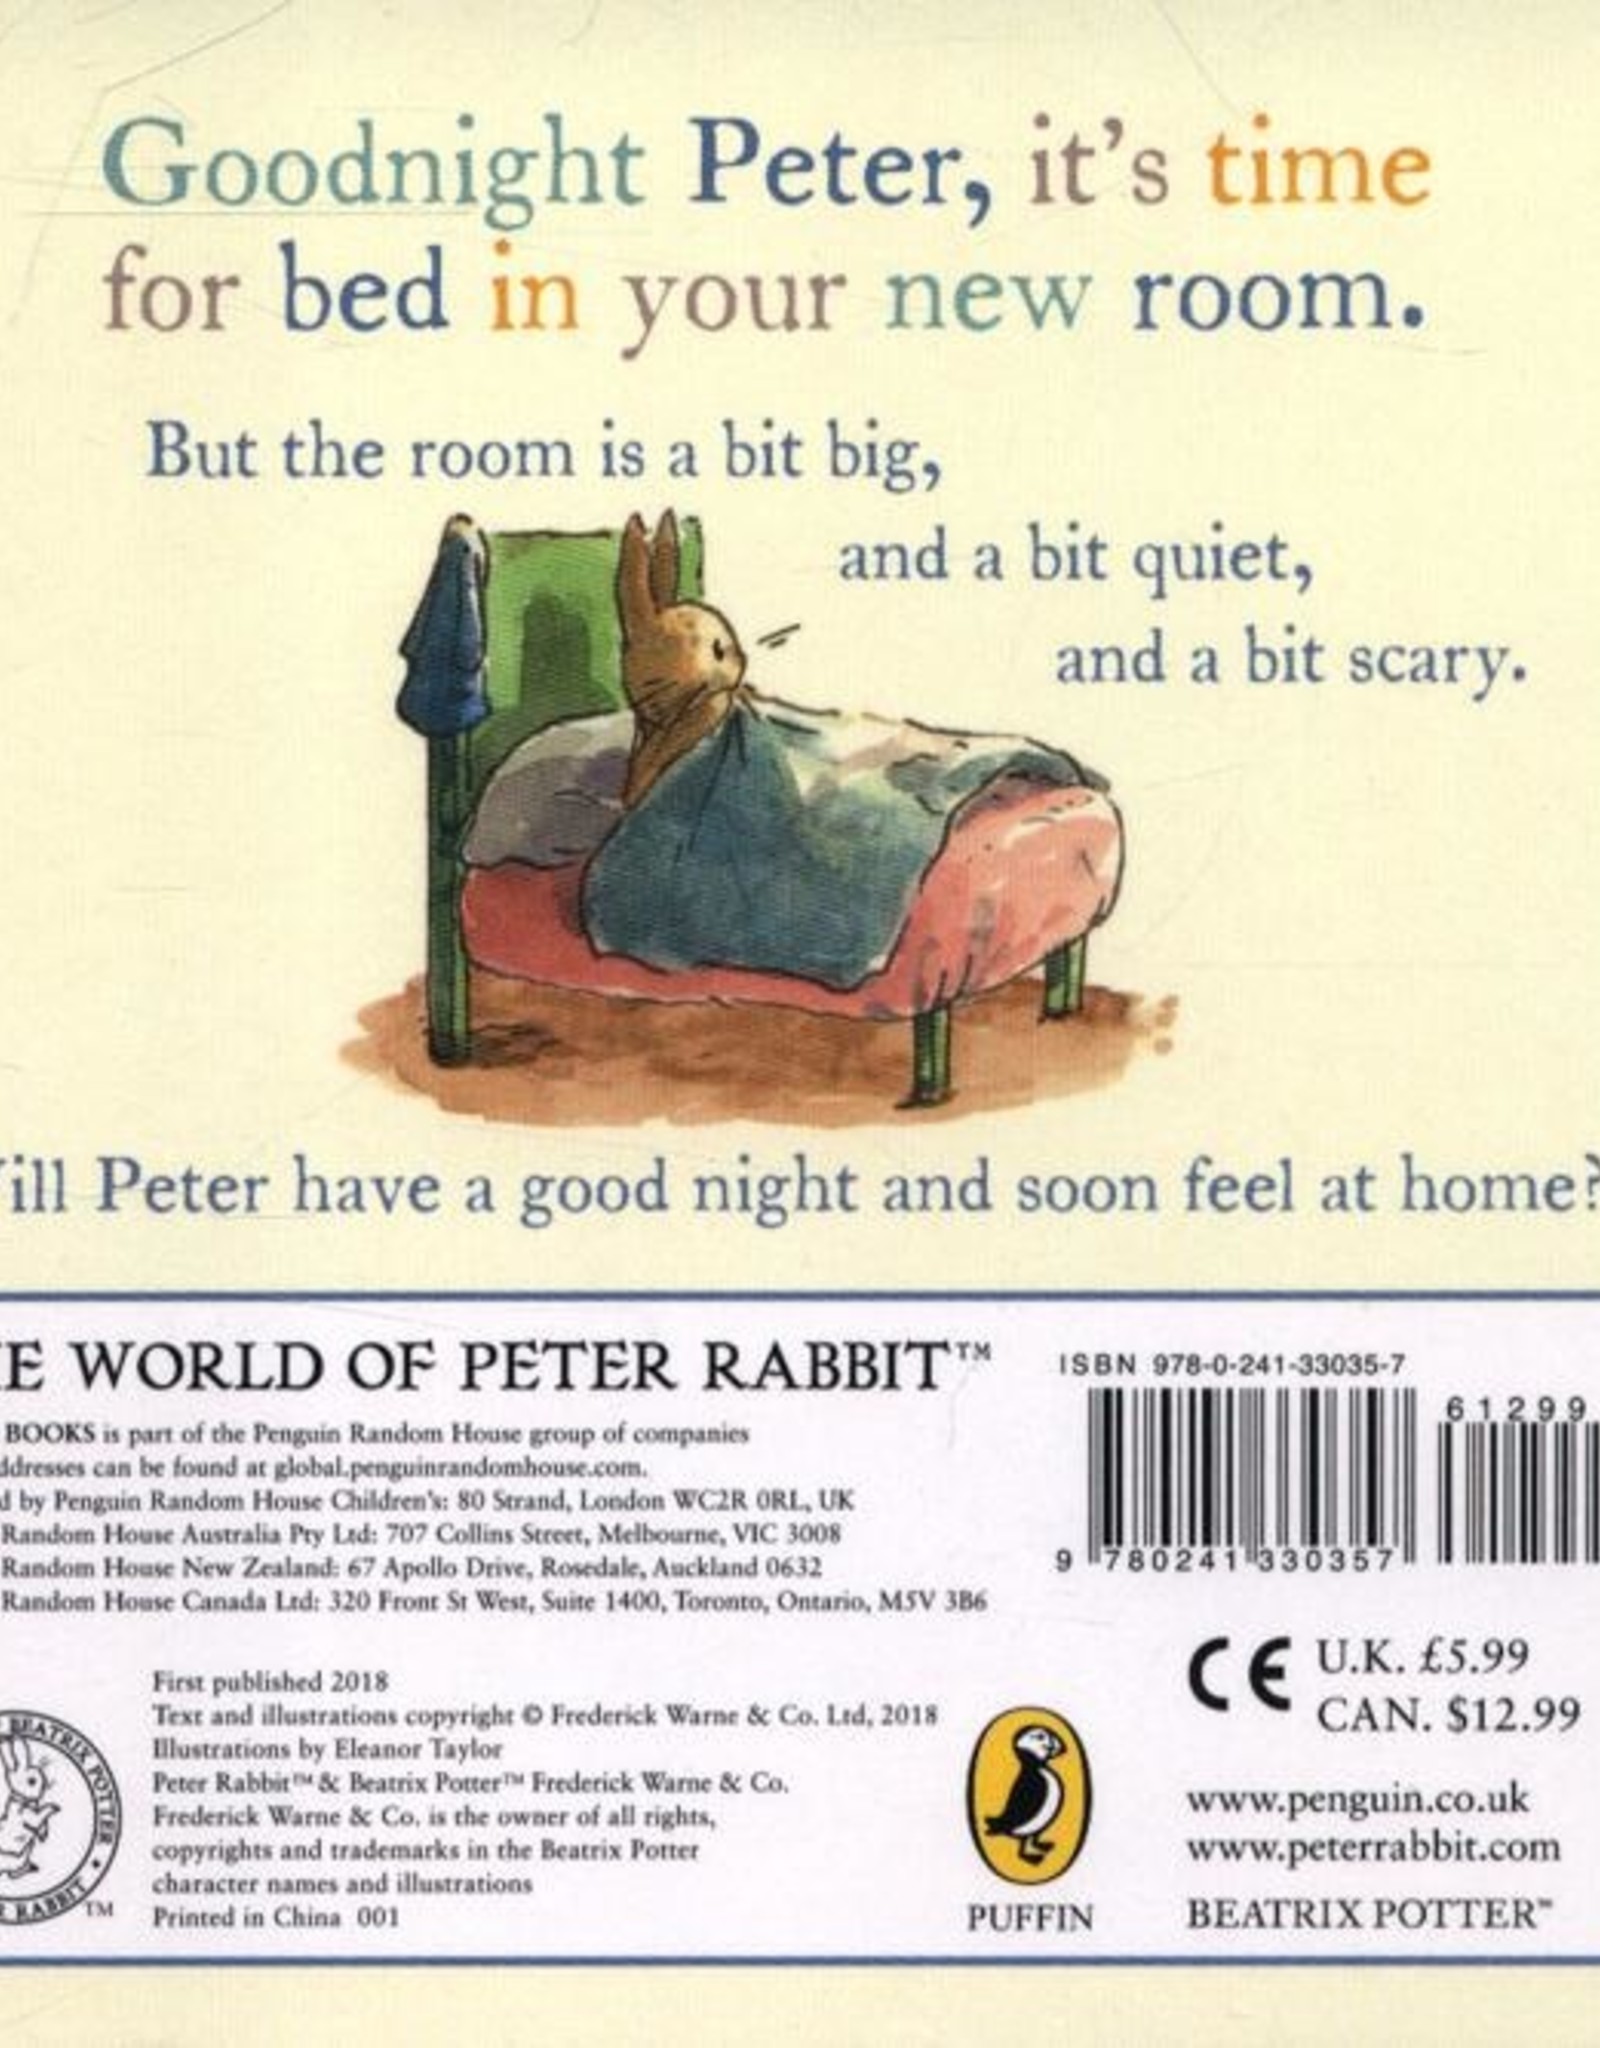 GOODNIGHT PETER (A PETER RABBIT TALE)